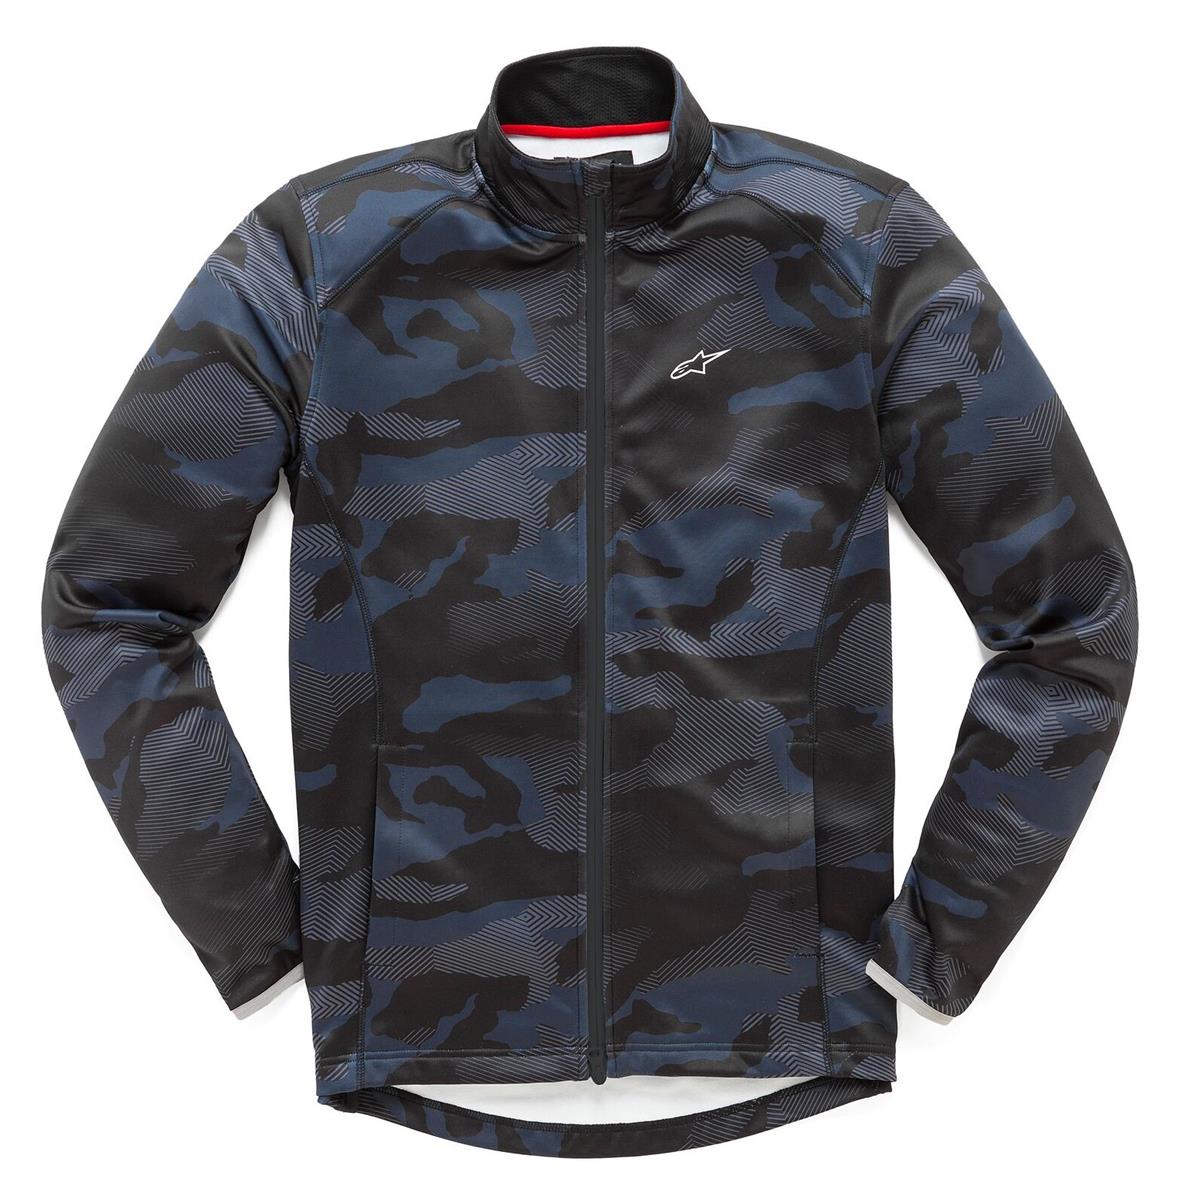 Alpinestars Jacket Purpose Mid Layer Camo Print